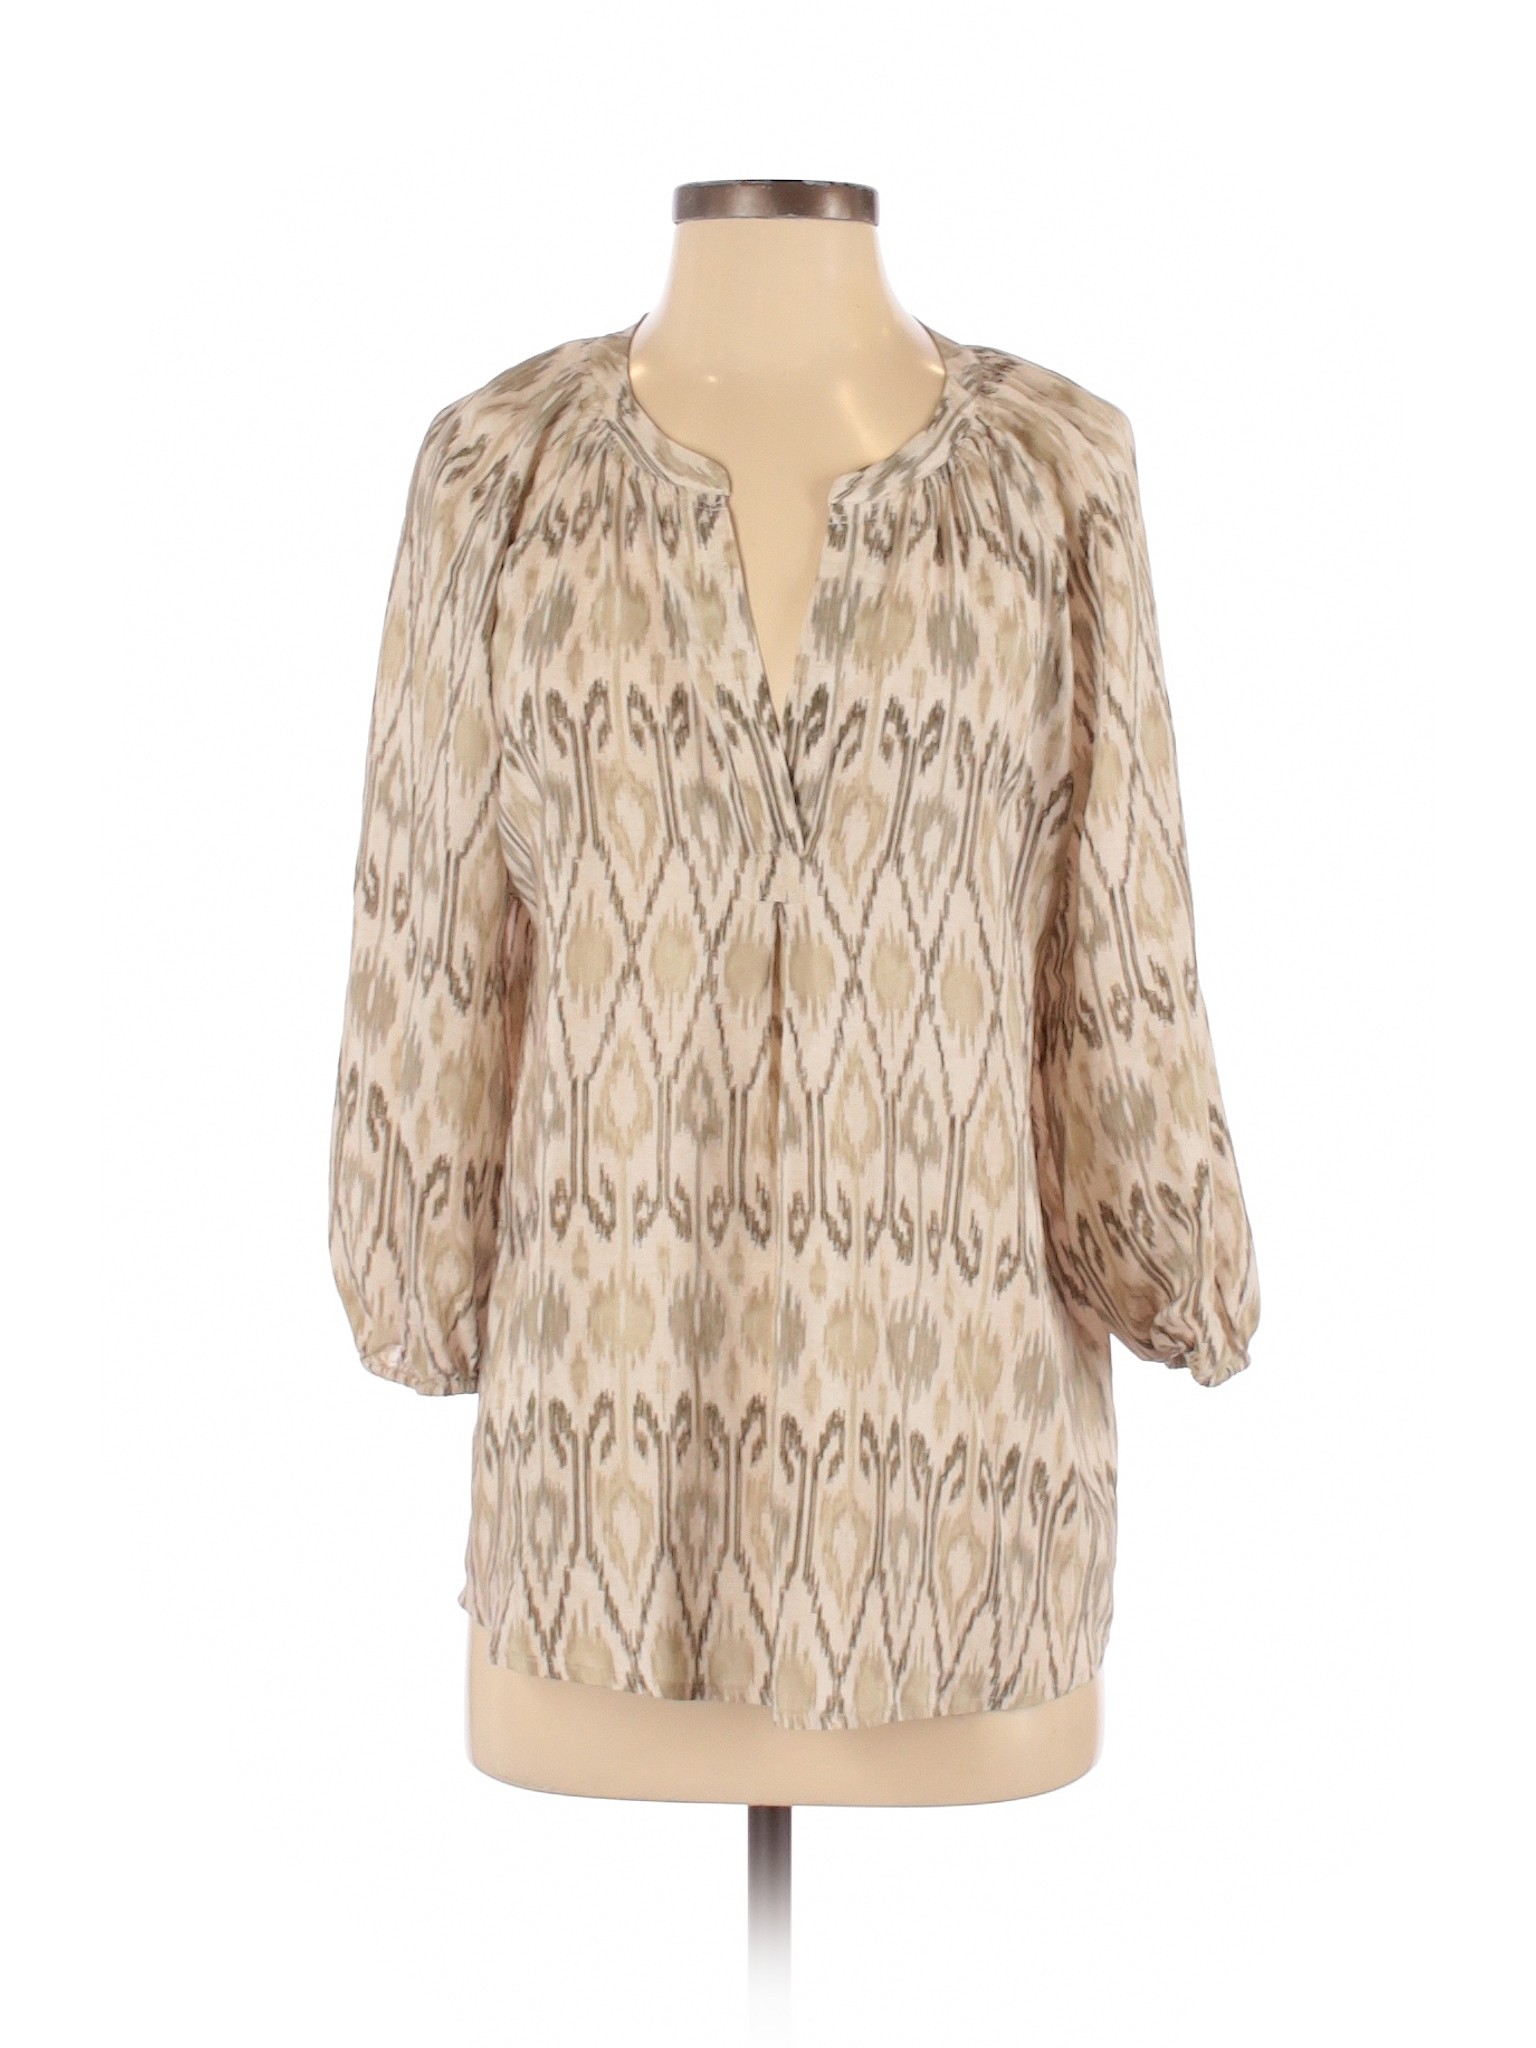 Joie Women Brown 3/4 Sleeve Silk Top S | eBay